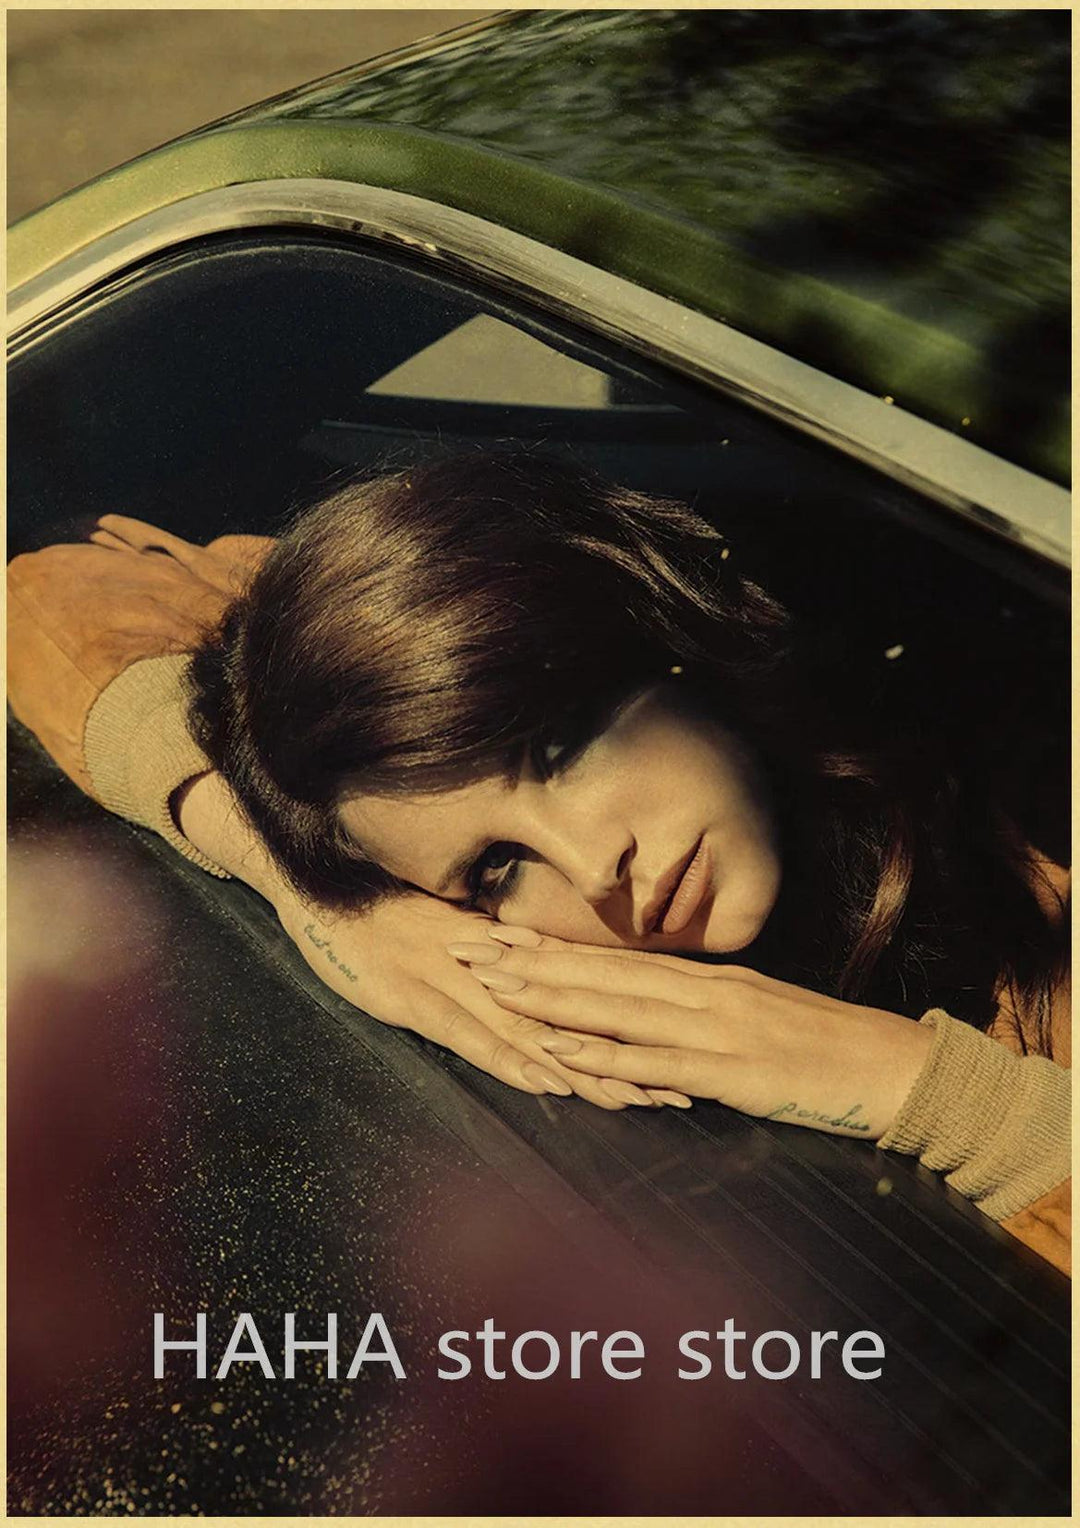 Lana Del Rey Music Posters - Retro Wall Art Prints - Home Decor - Brand My Case